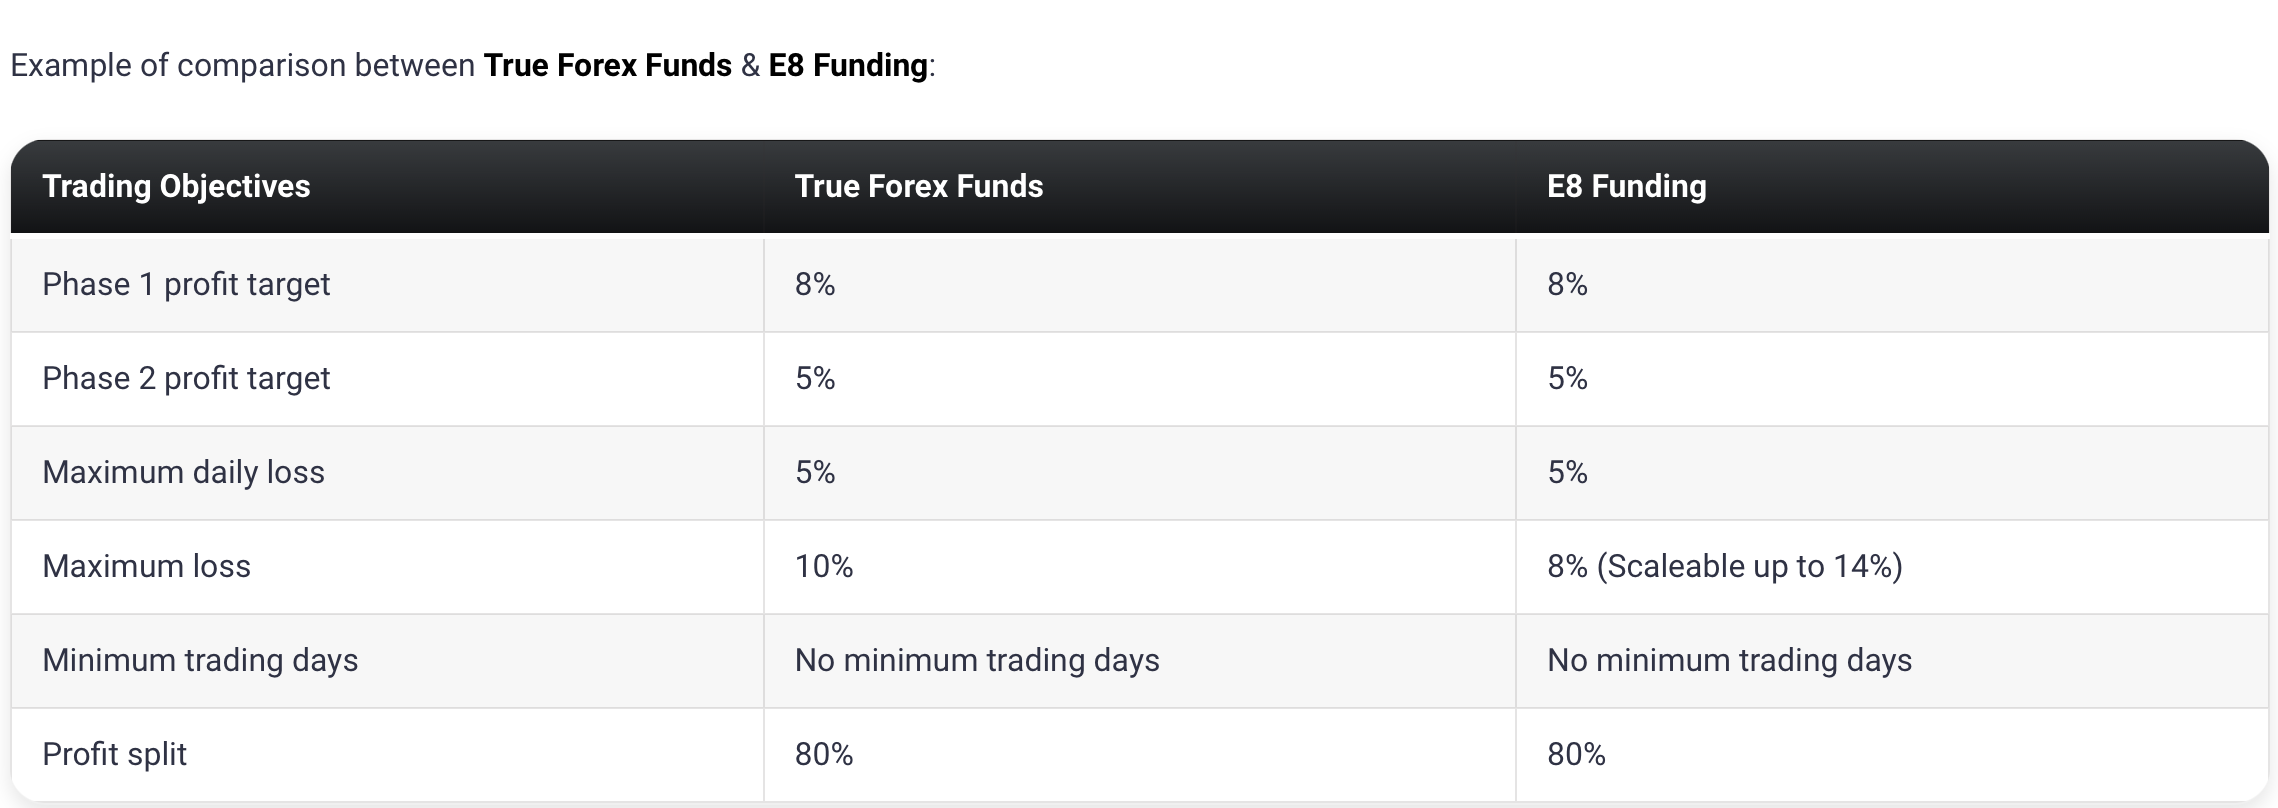 7True Forex Funds